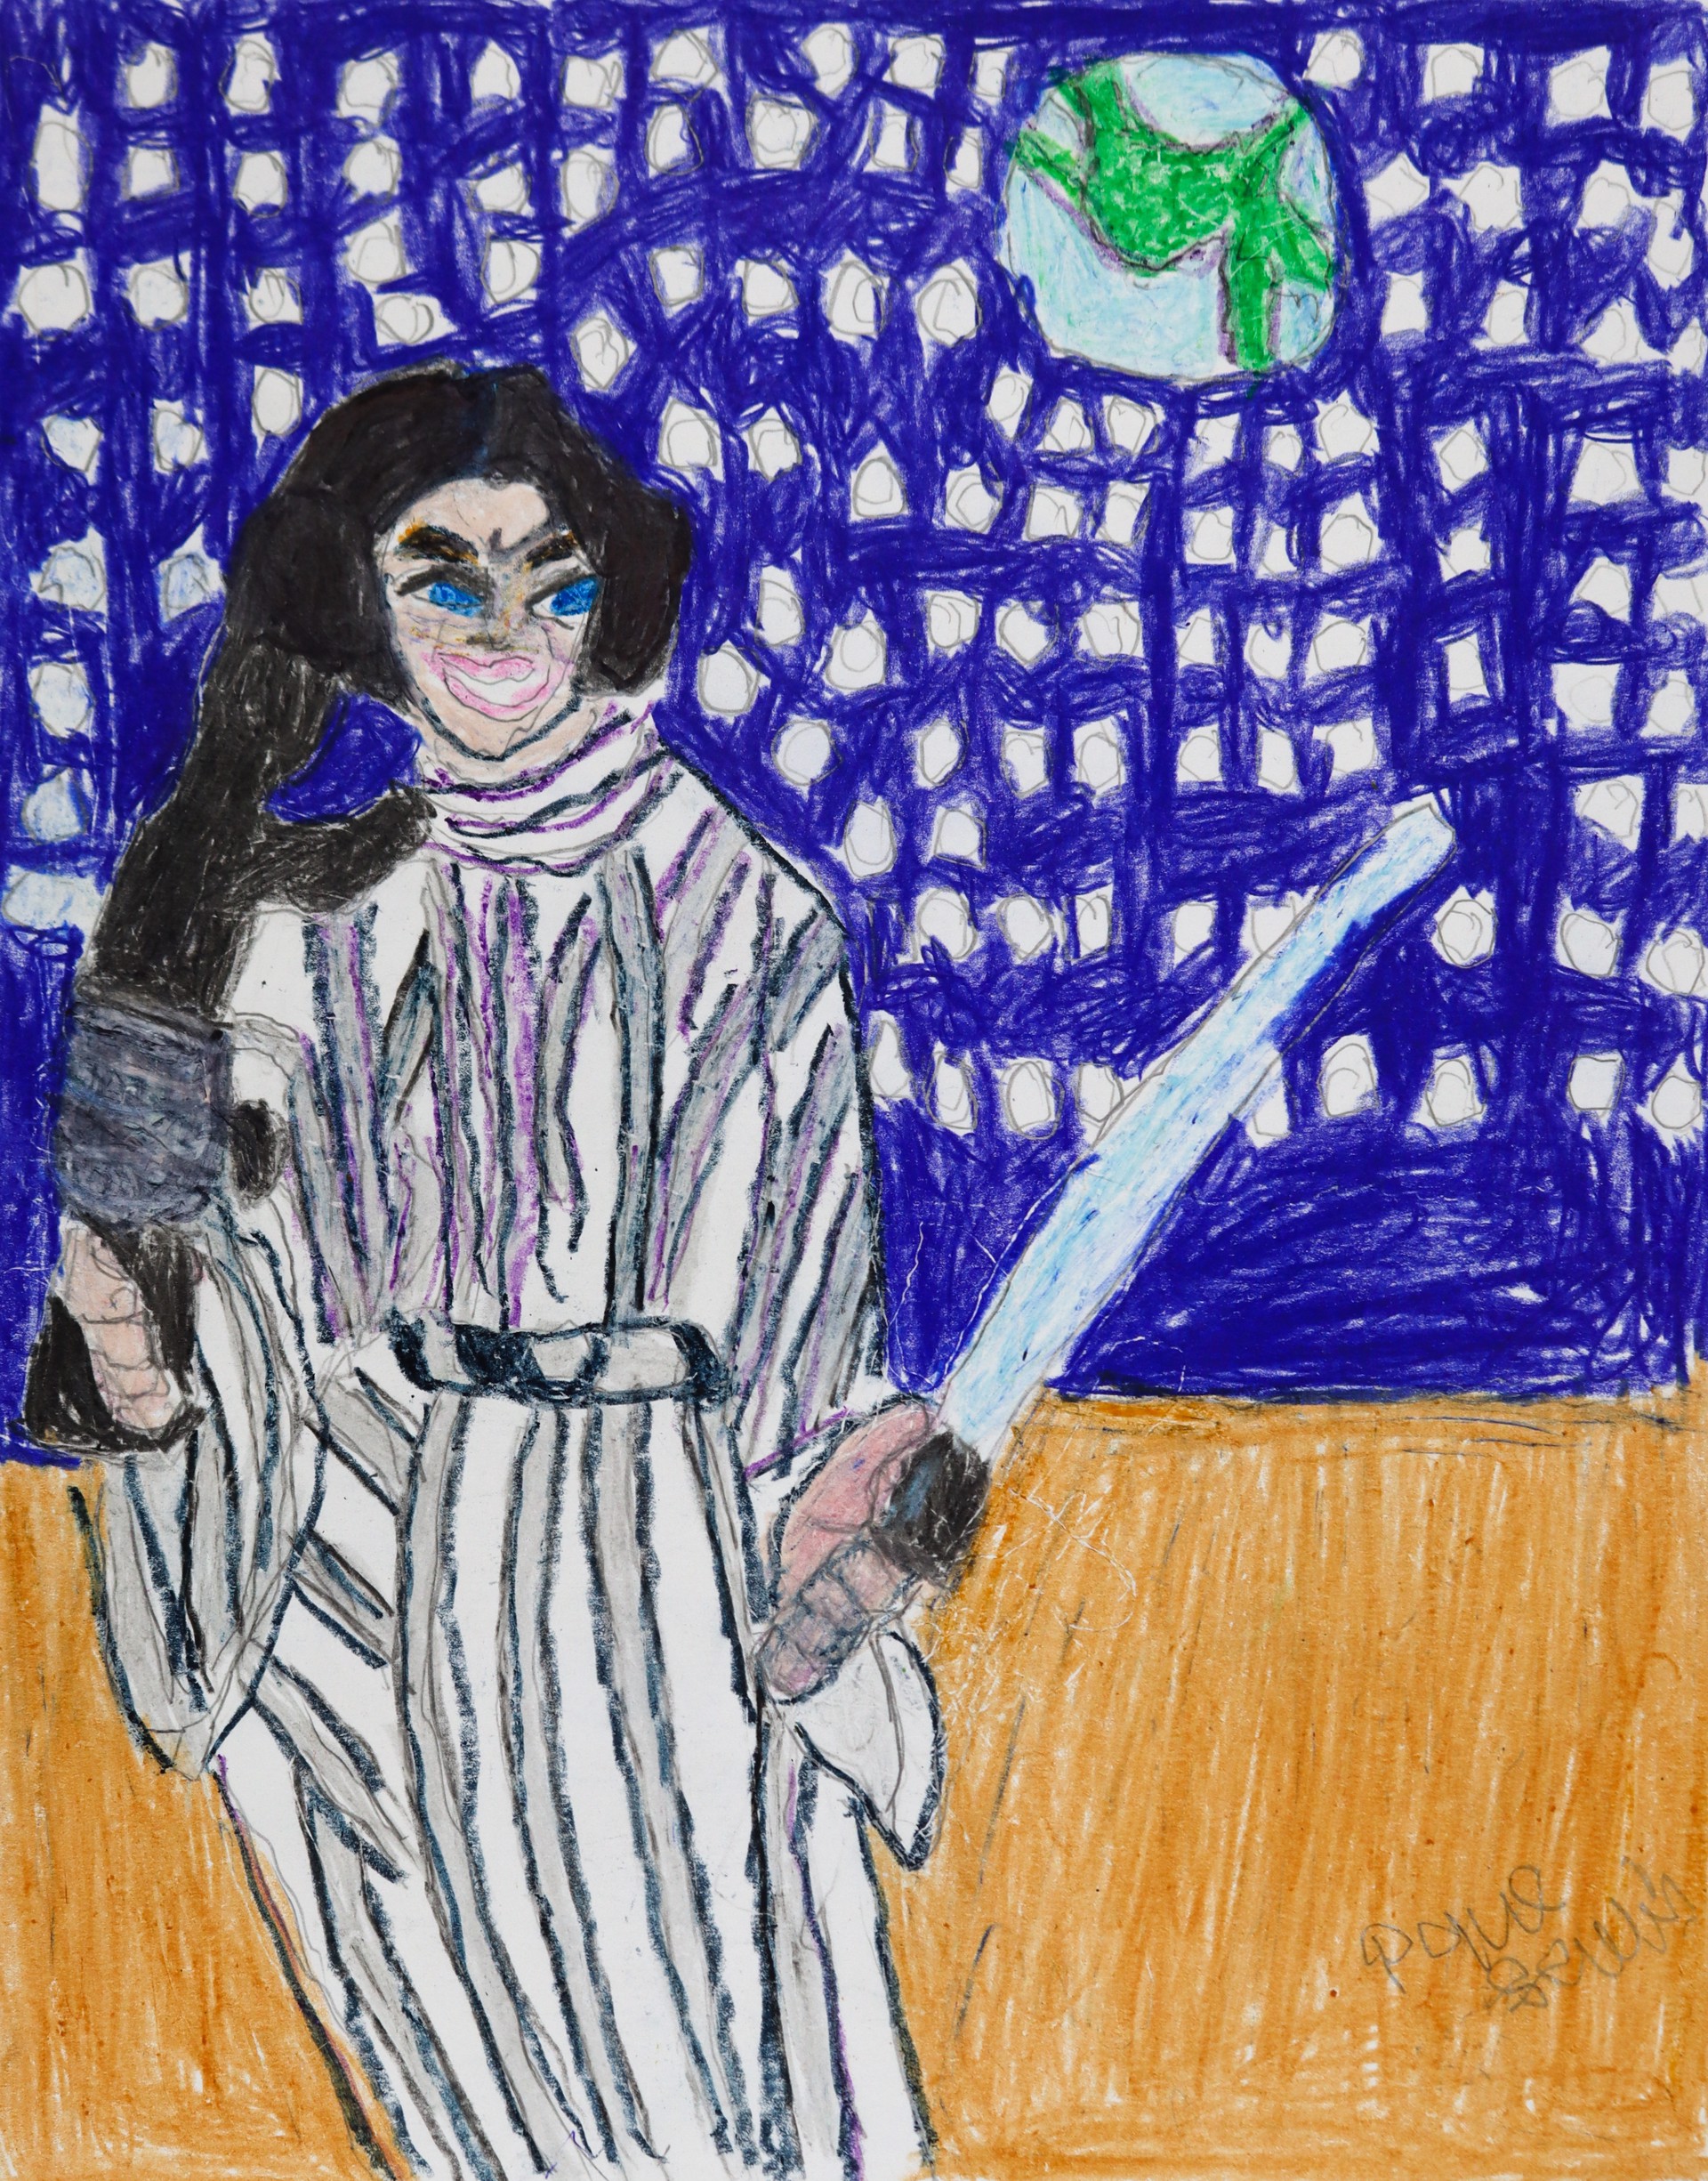 Princess Leia Lightsaber by Paul Lewis